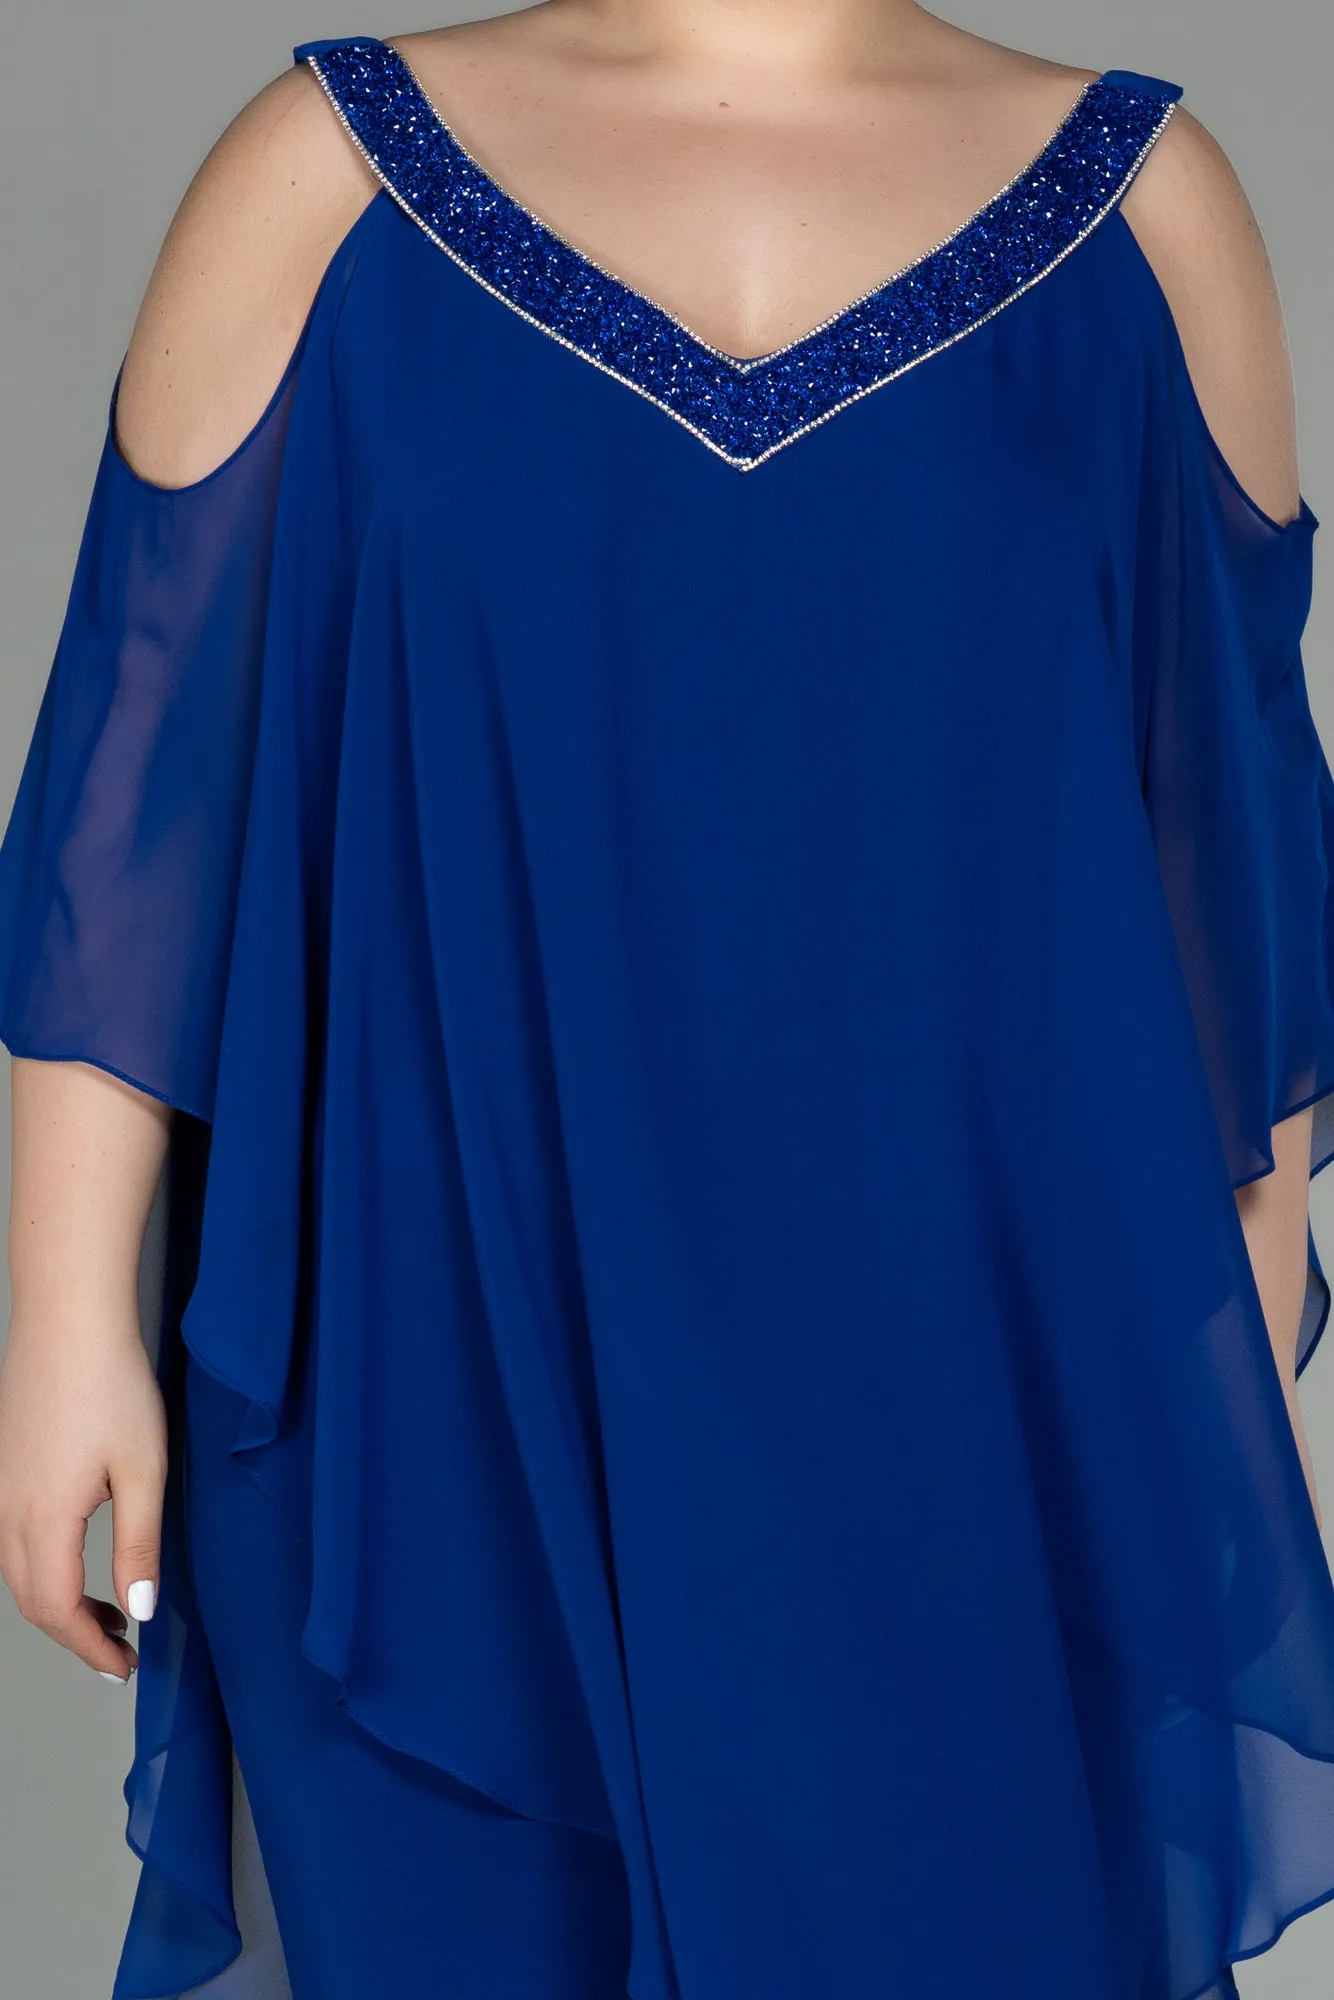 Sax Blue-Chiffon Plus Size Evening Dress ABT096